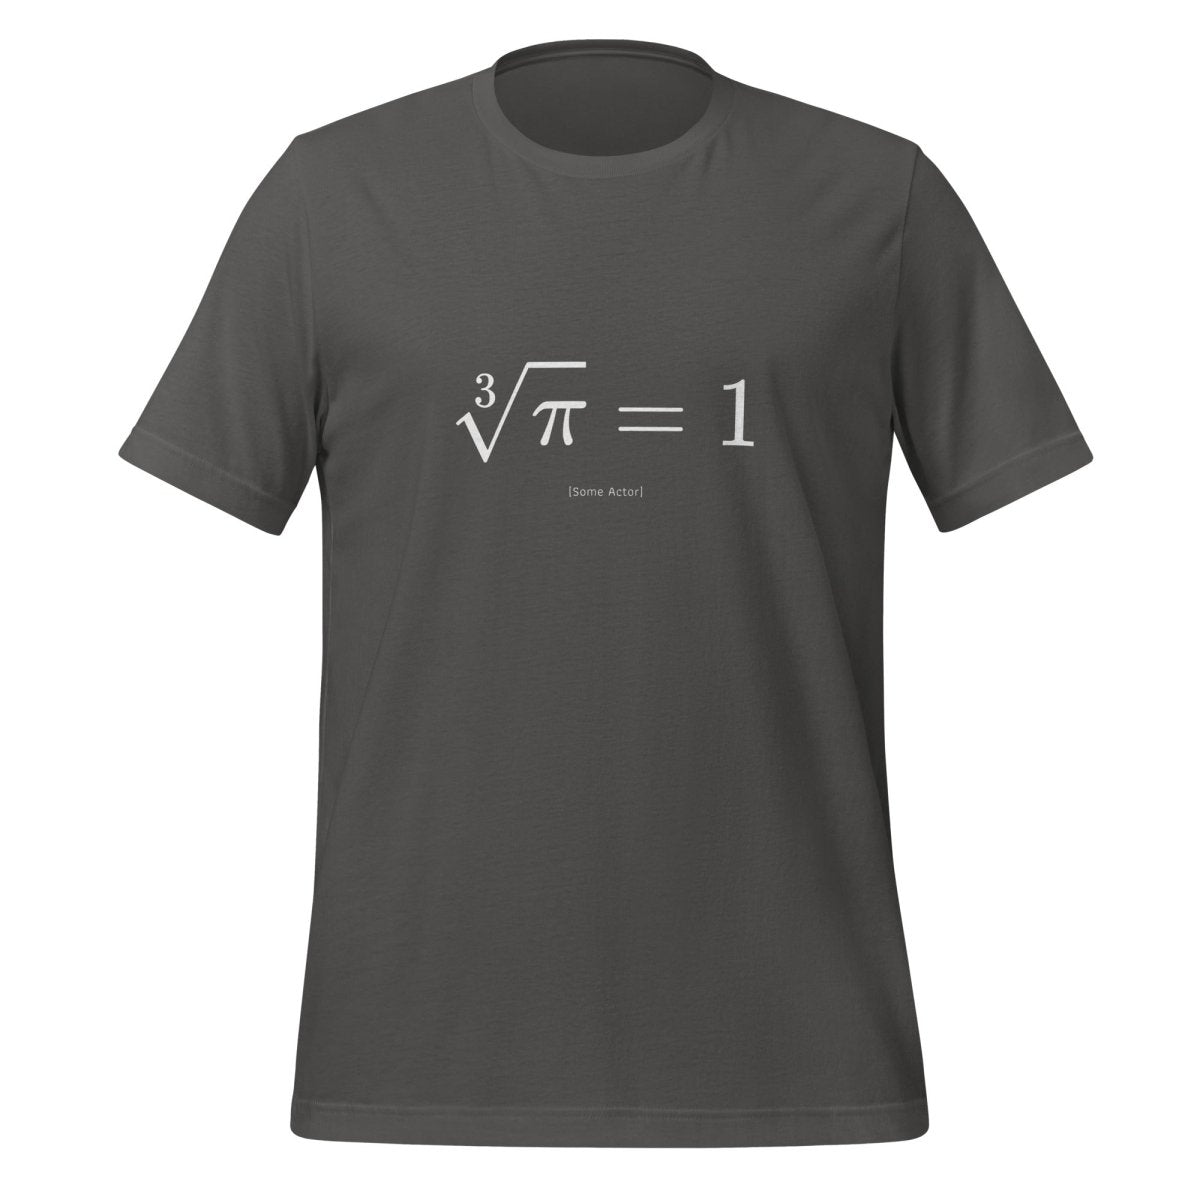 The Cube Root of Pi Equals 1 T - Shirt (unisex) - Asphalt - AI Store